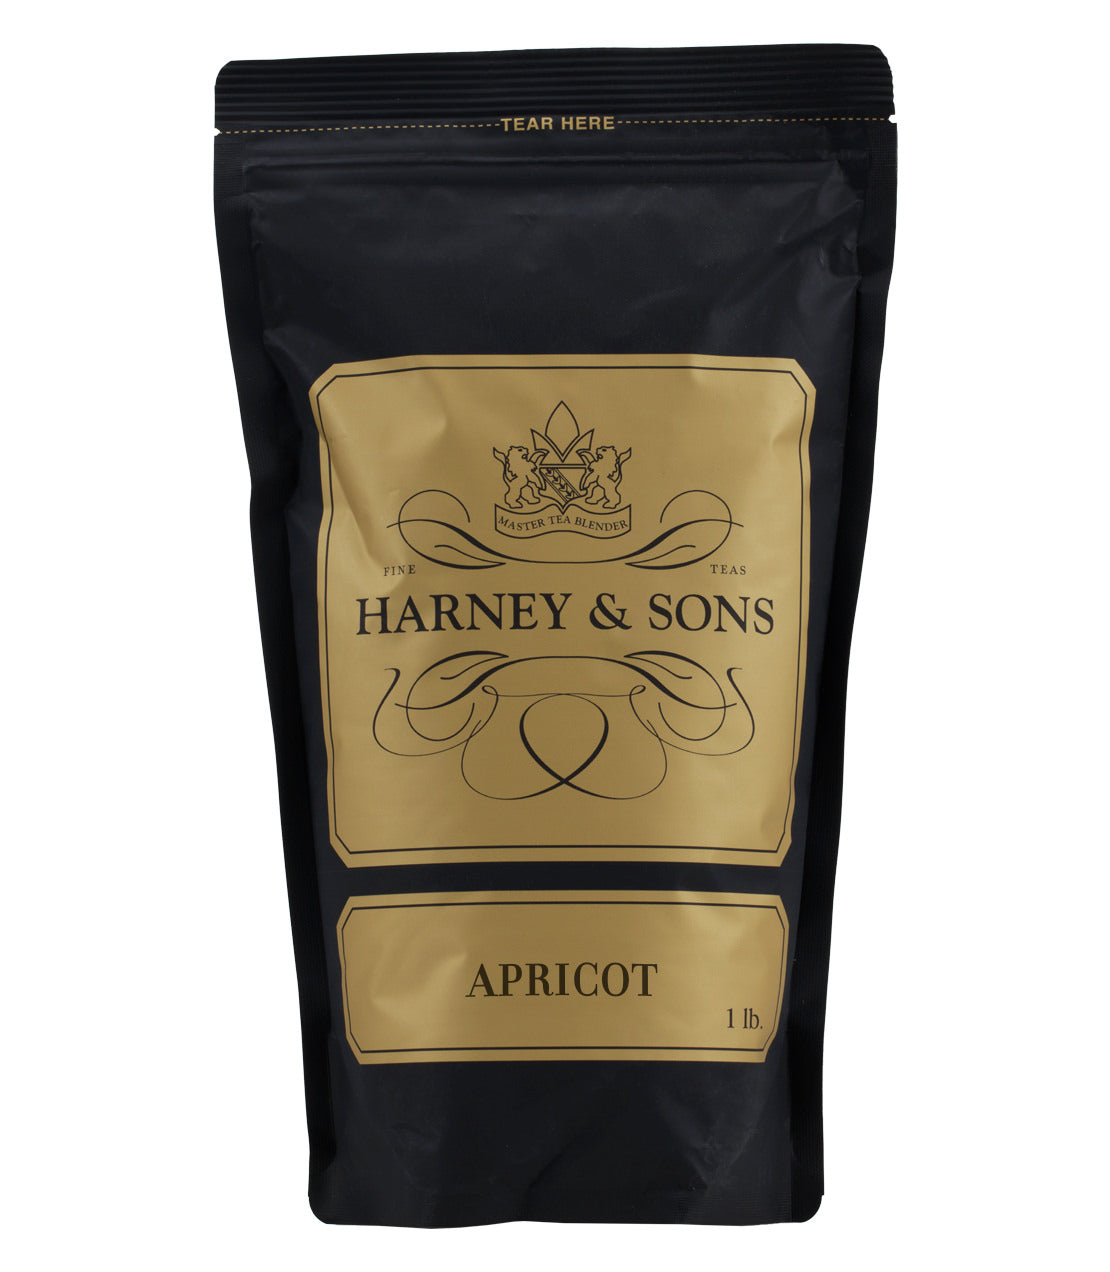 Apricot - Loose 1 lb. Bag - Harney & Sons Fine Teas